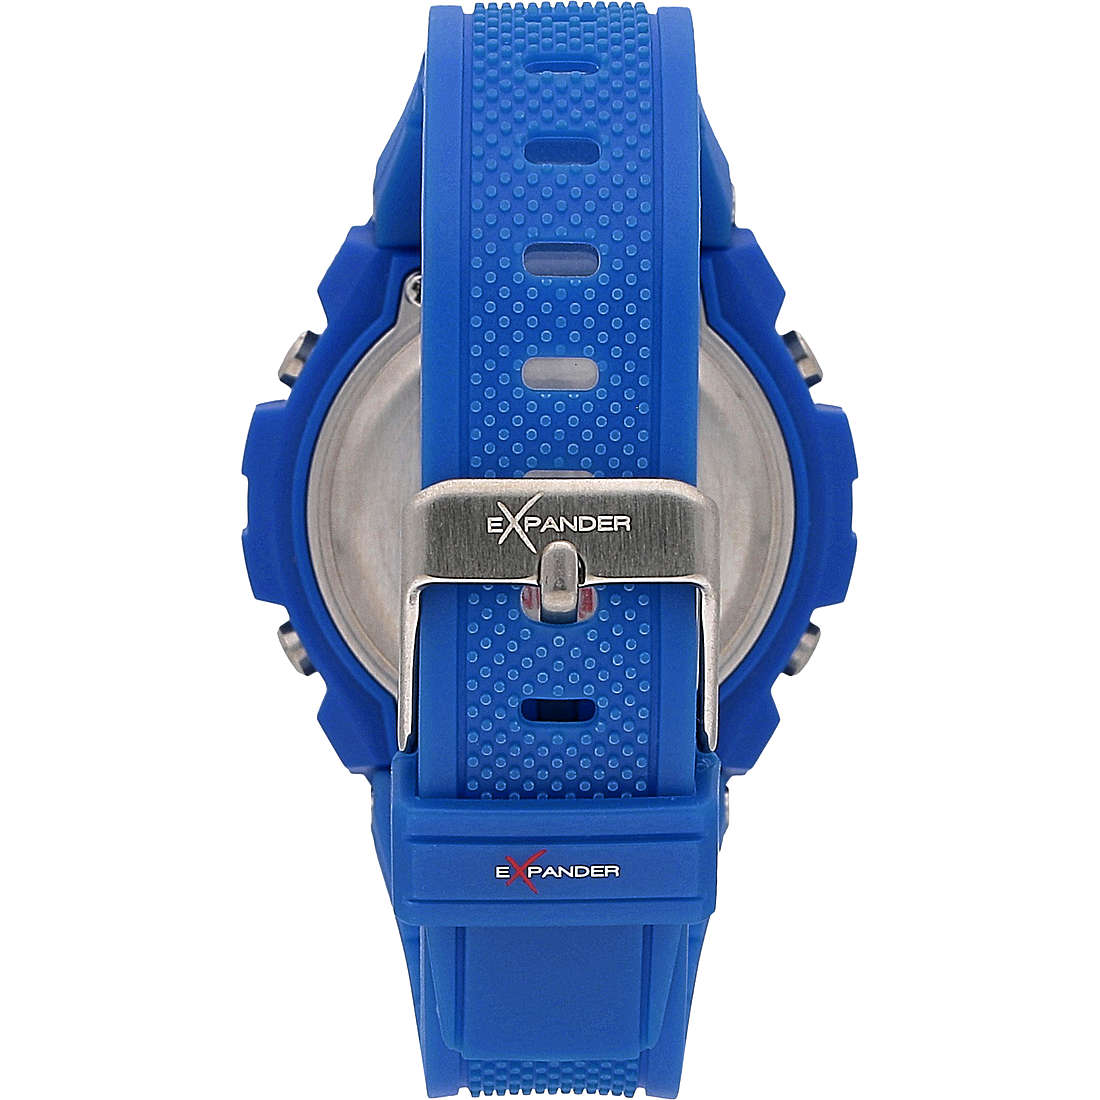 orologio digitale uomo Sector Ex-10 - R3251537003 R3251537003